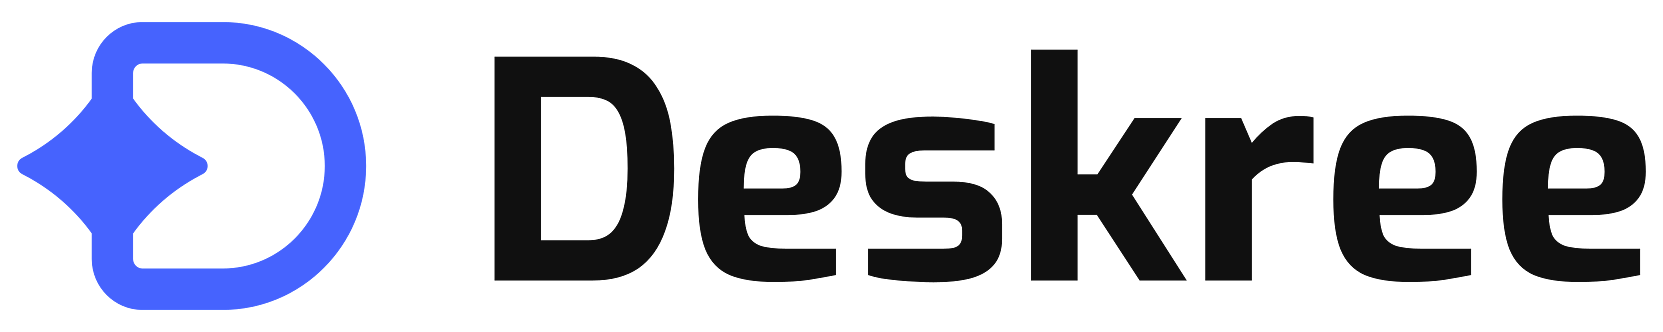 Deskree logo